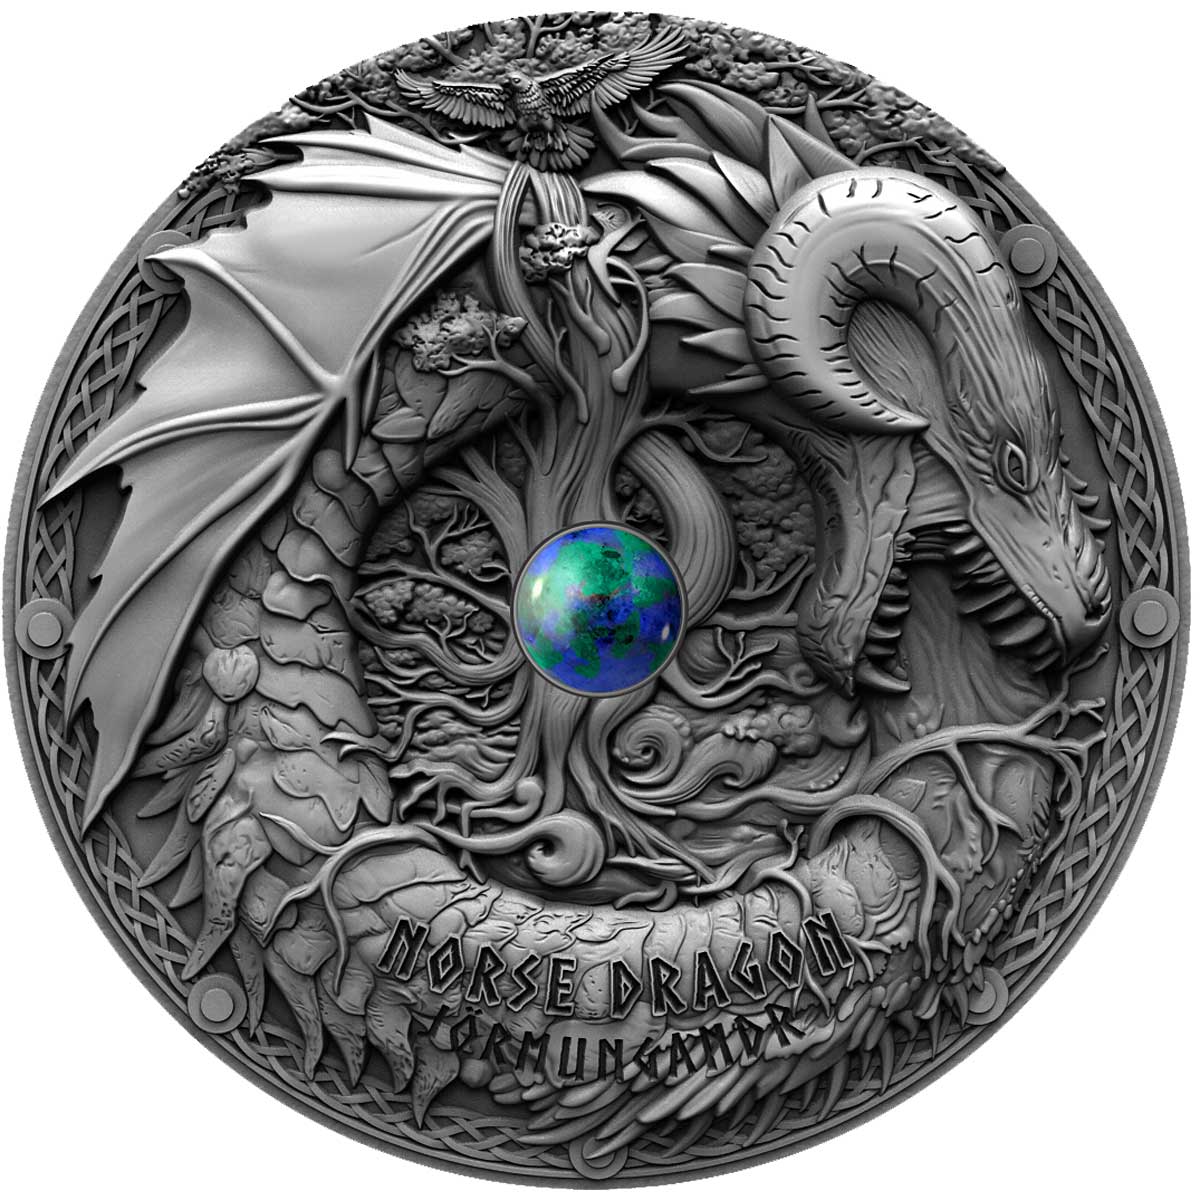 Nidhoggr The Dragon 5 oz Silver Antiqued Round W/COA Nordic Creatures Series 